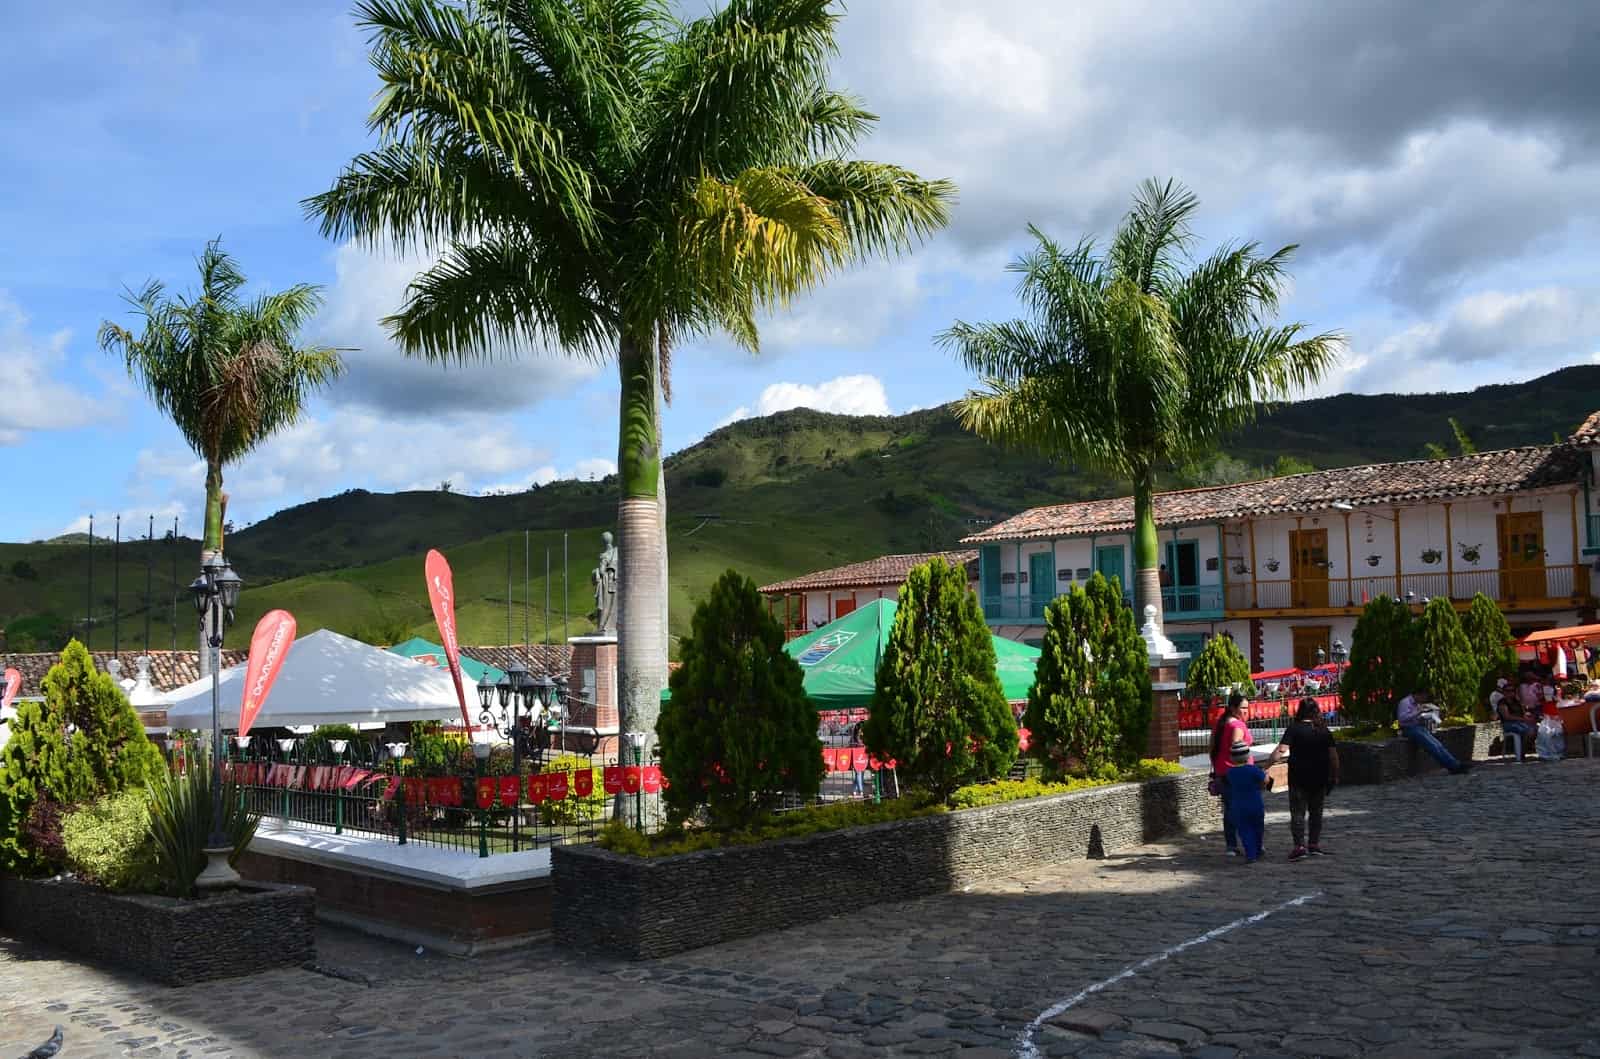 Plaza in Concepción, Antioquia, Colombia